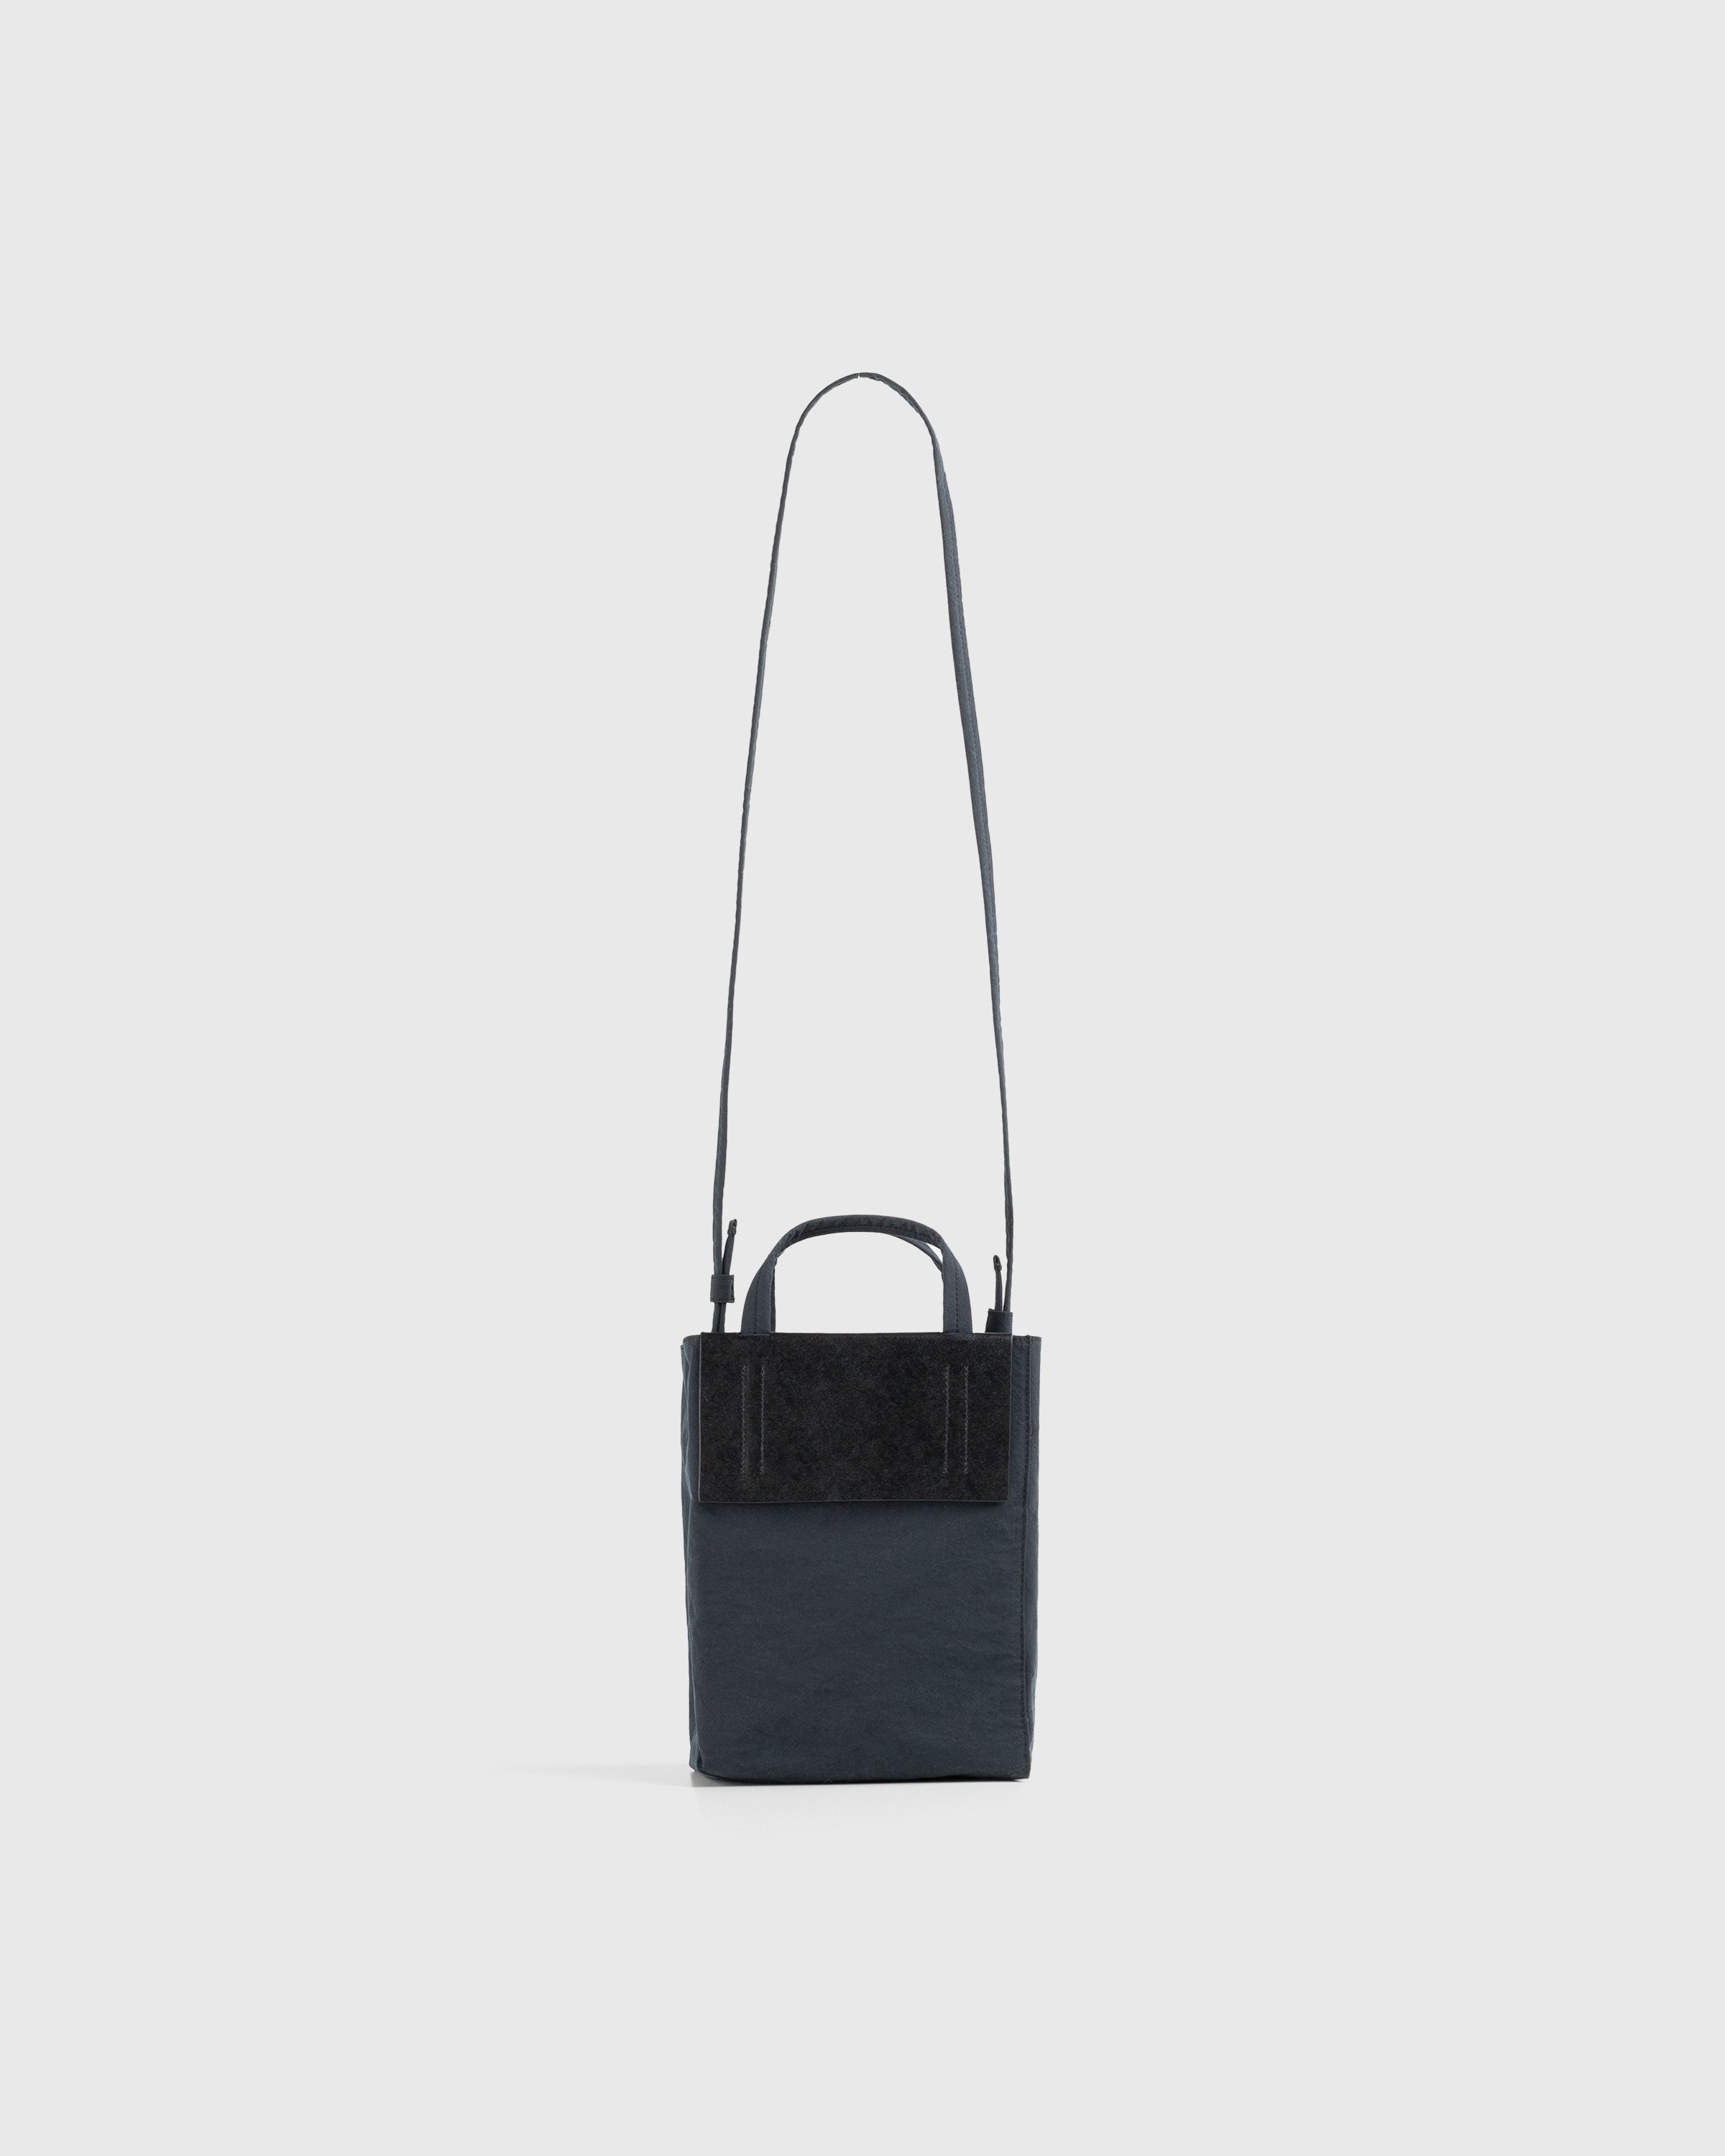 Acne Studios - Papery Nylon Tote Bag Black - Accessories - Black - Image 2